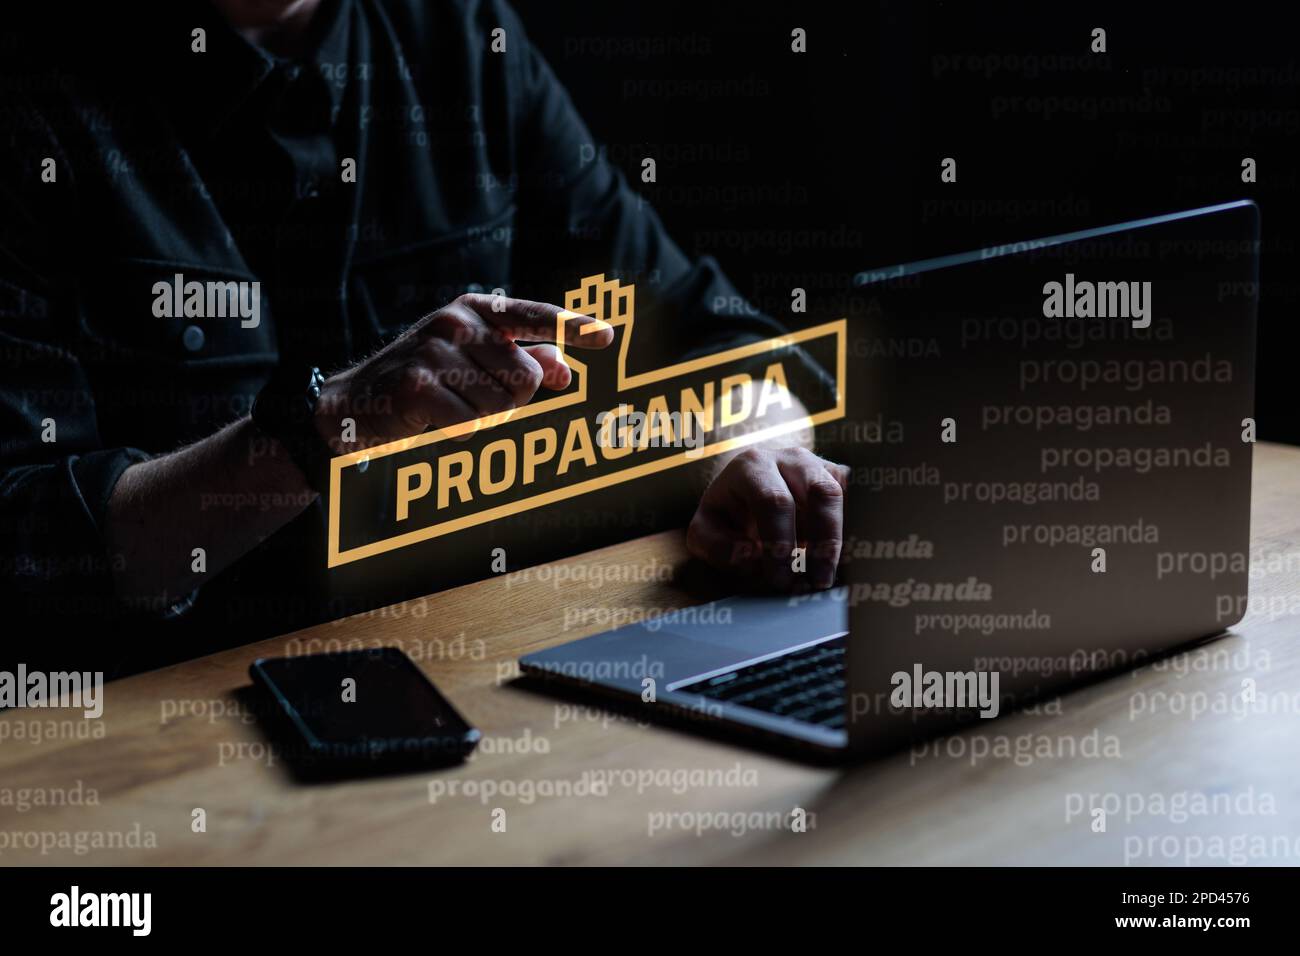 Propaganda visual concept. Man points finger at Propaganda text. High quality photo Stock Photo